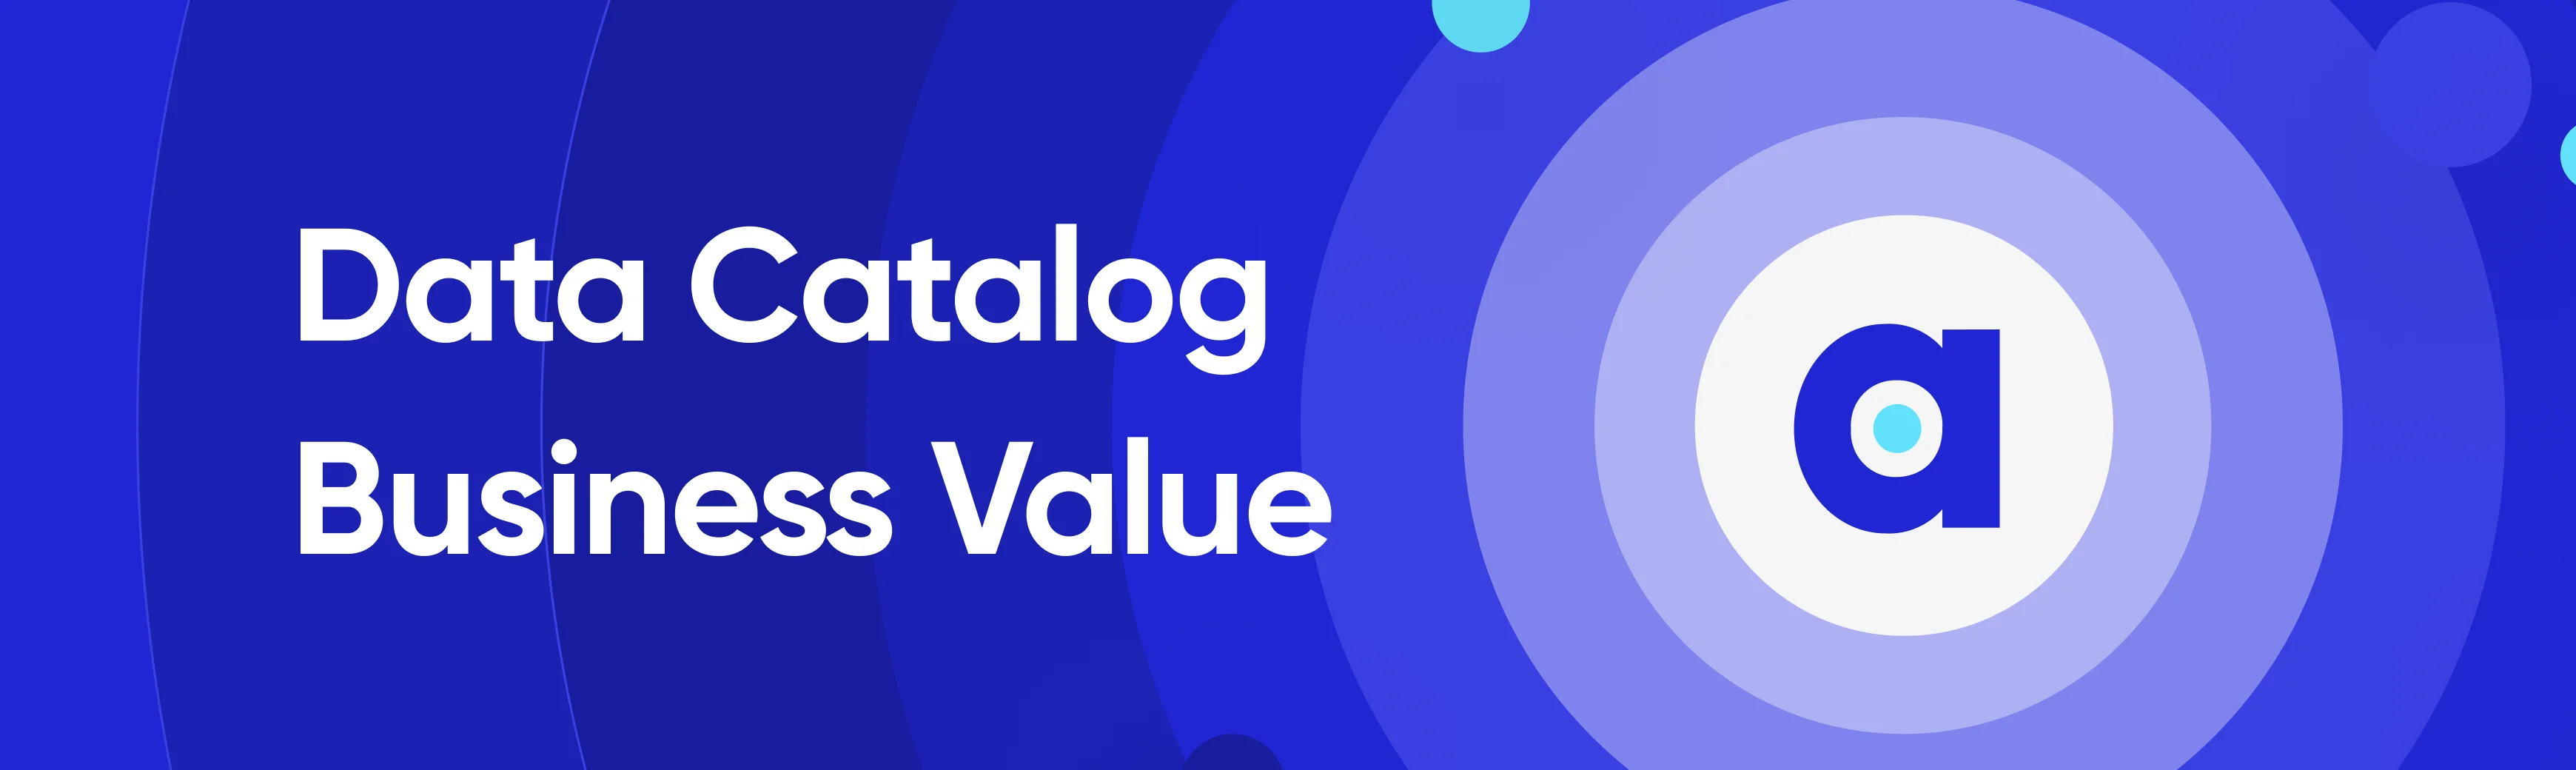 Data Catalog Business Value